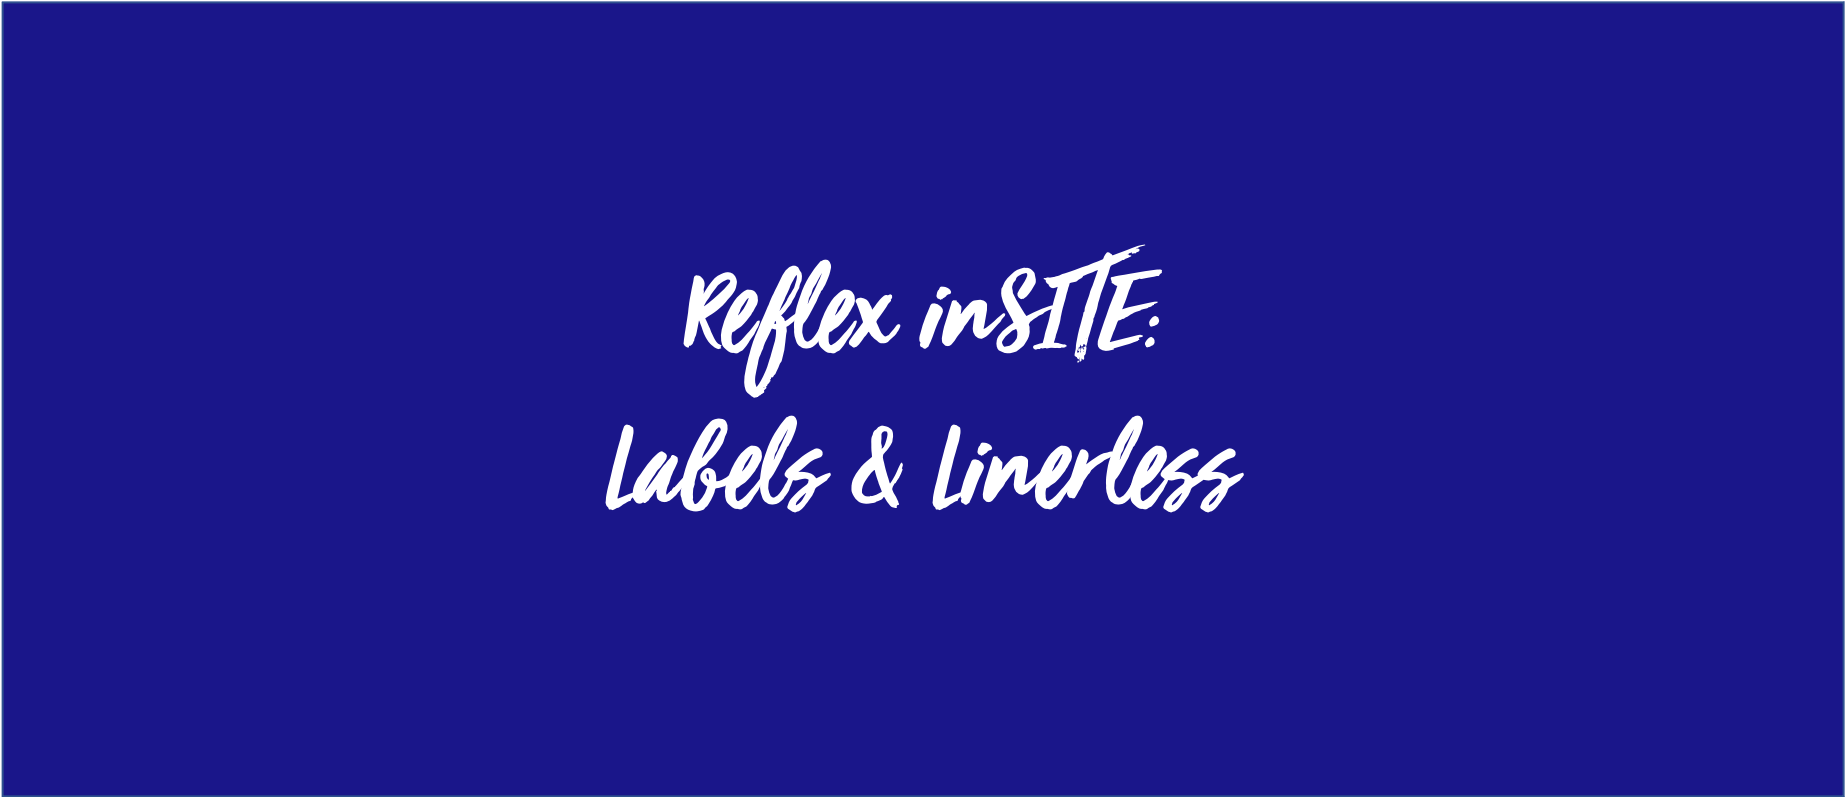 Reflex inSITE: Labels & Linerless